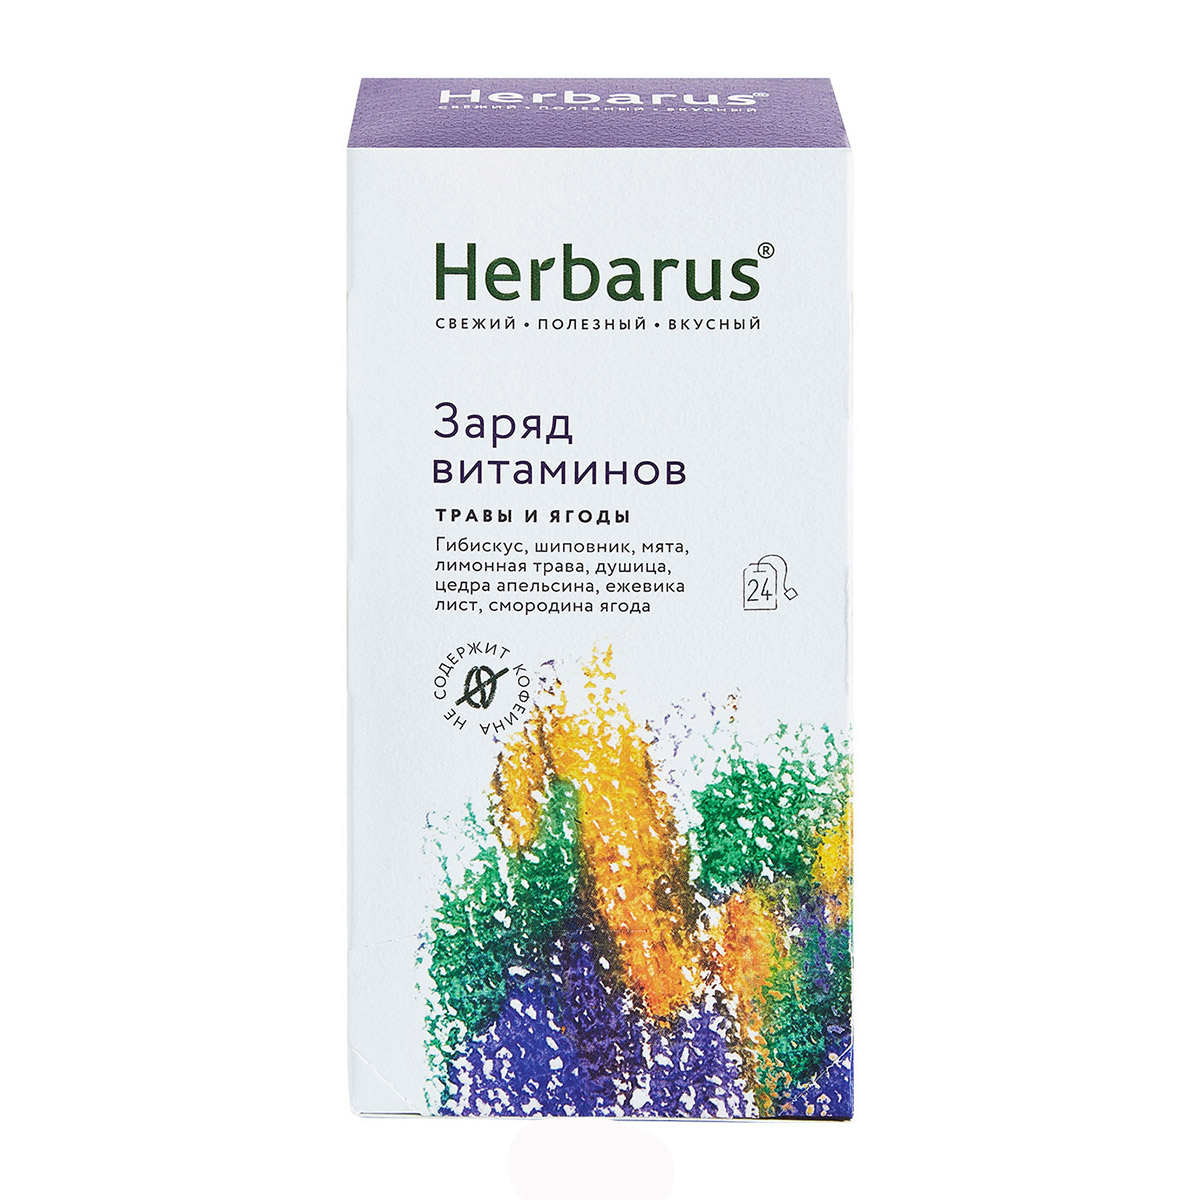 Herbarus Чайный напиток Заряд витаминов, 24 х 1,8 г (Herbarus, Травы и ягоды) чайный напиток herbarus имбирная энергия 24 пакетика